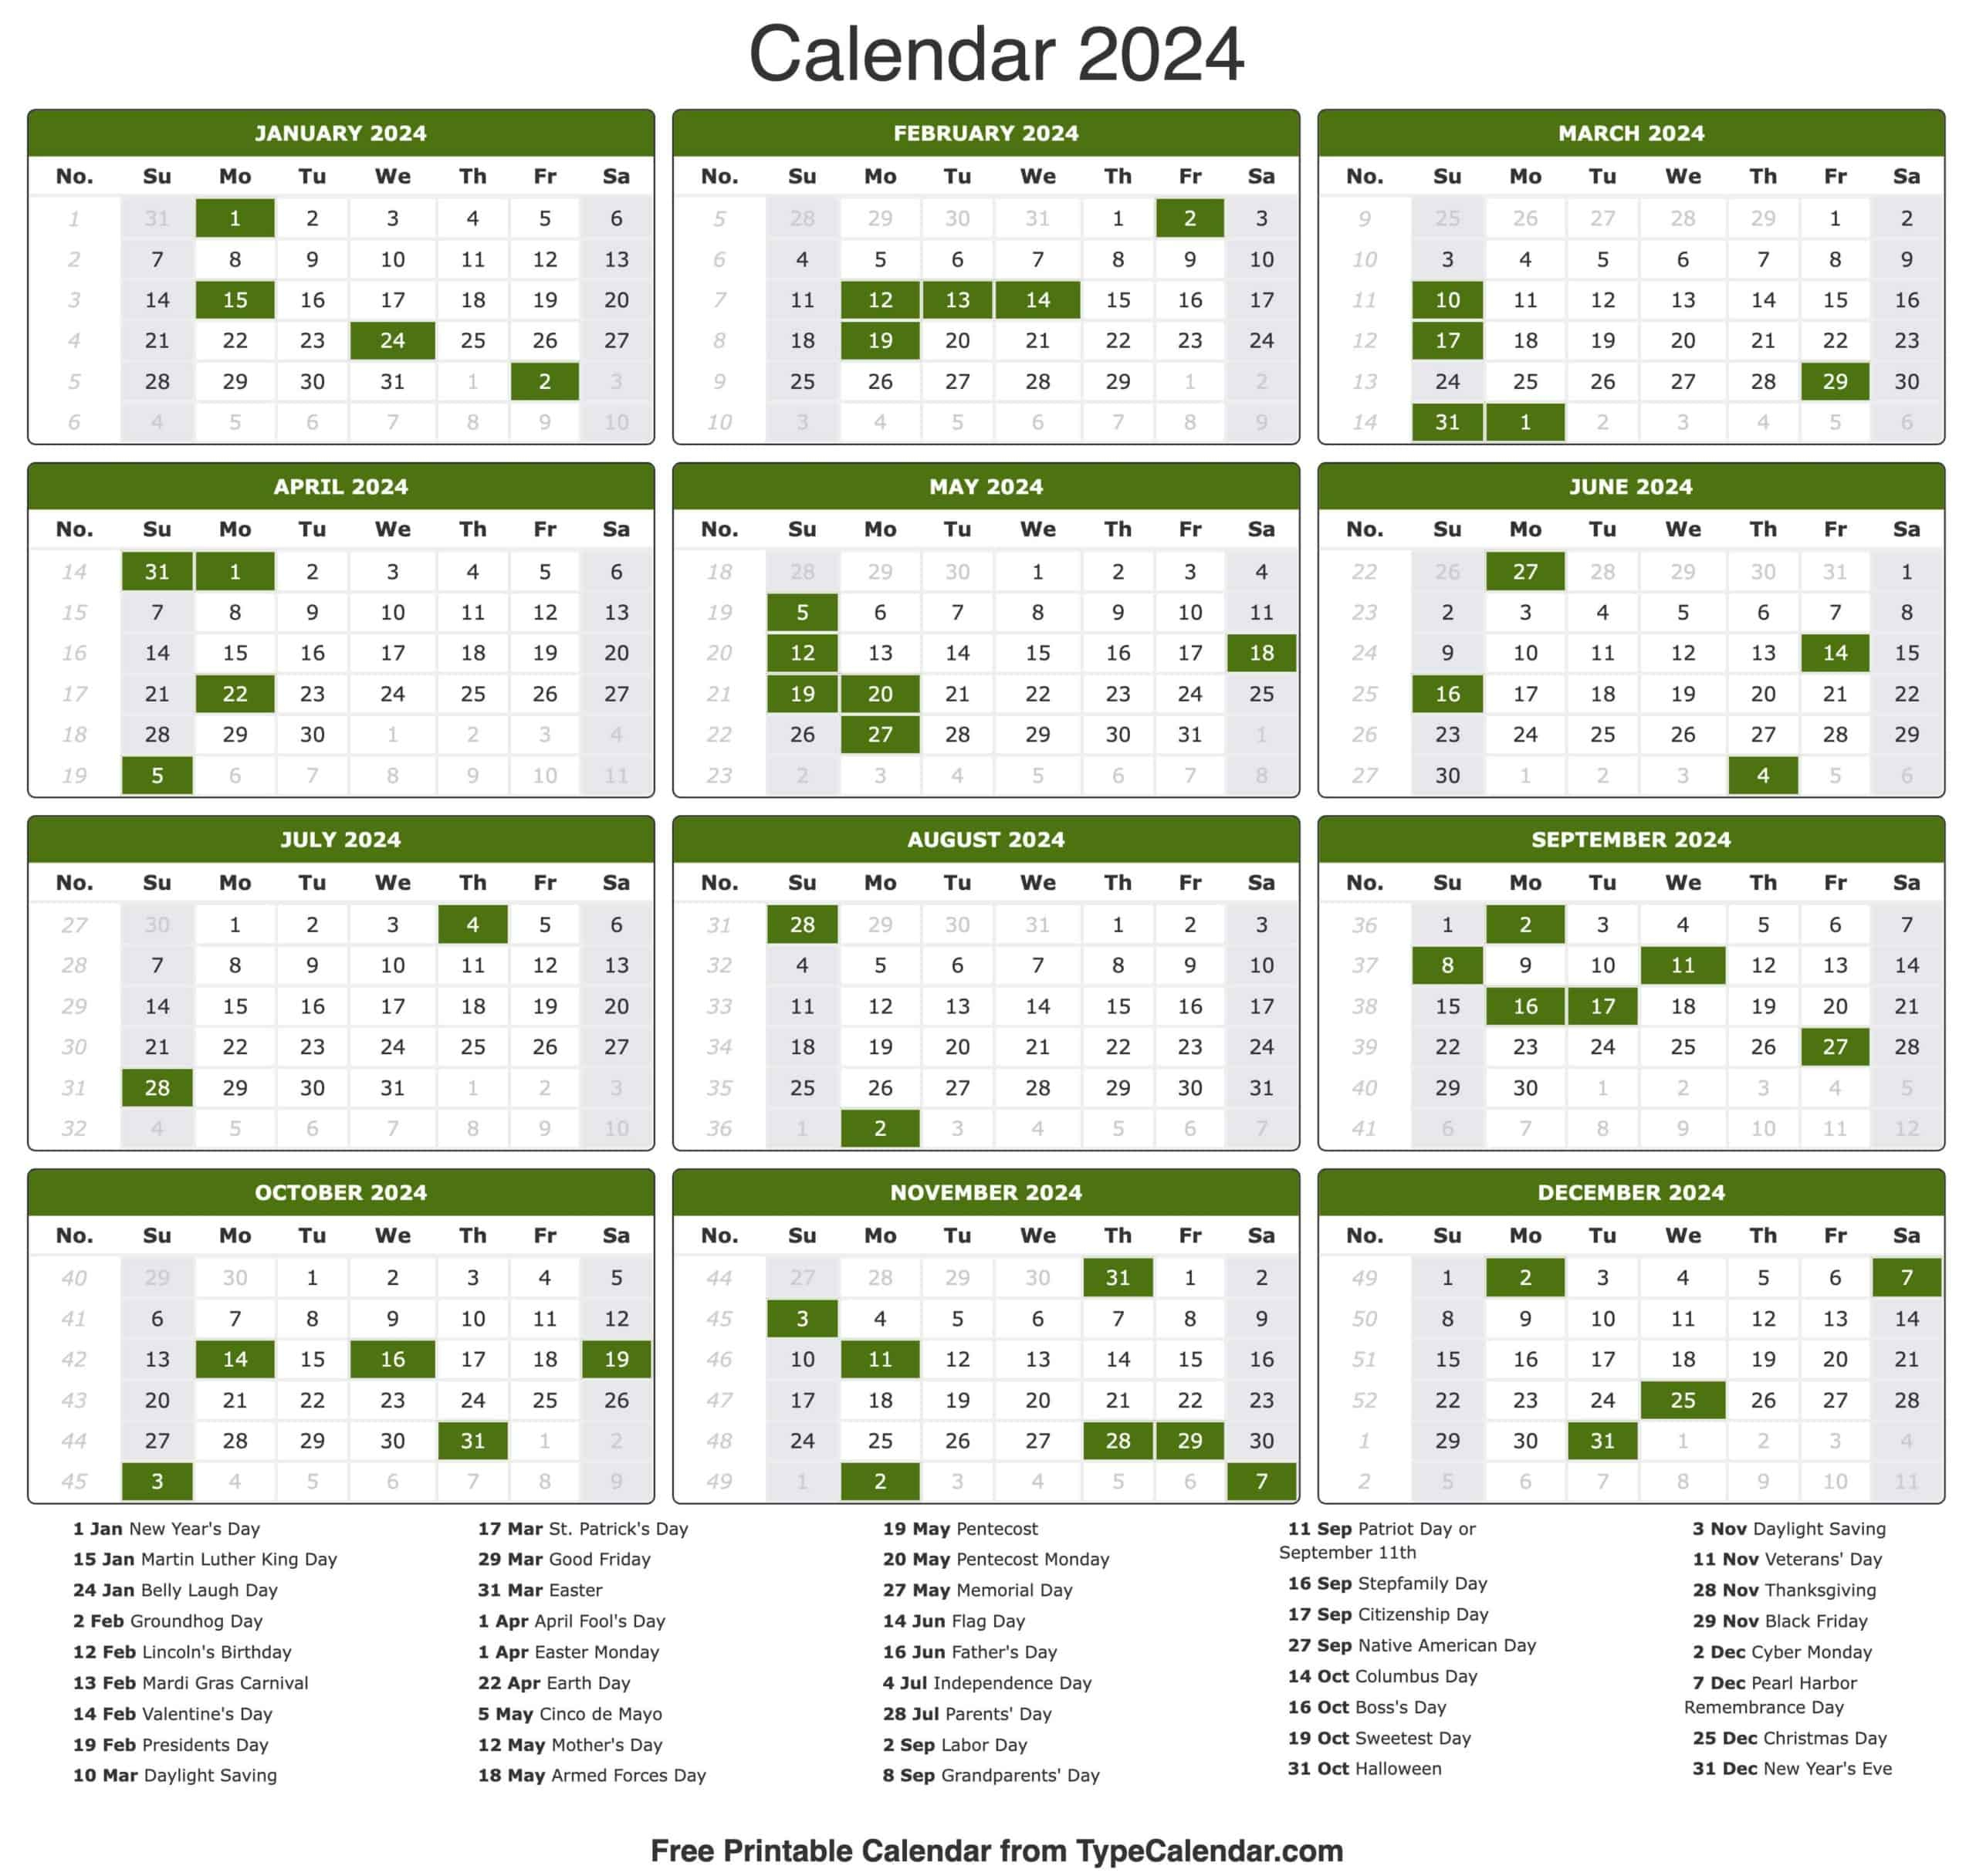 2024 Calendar: Free Printable Calendar With Holidays | Printable Calendar 2024 With Holidays Free